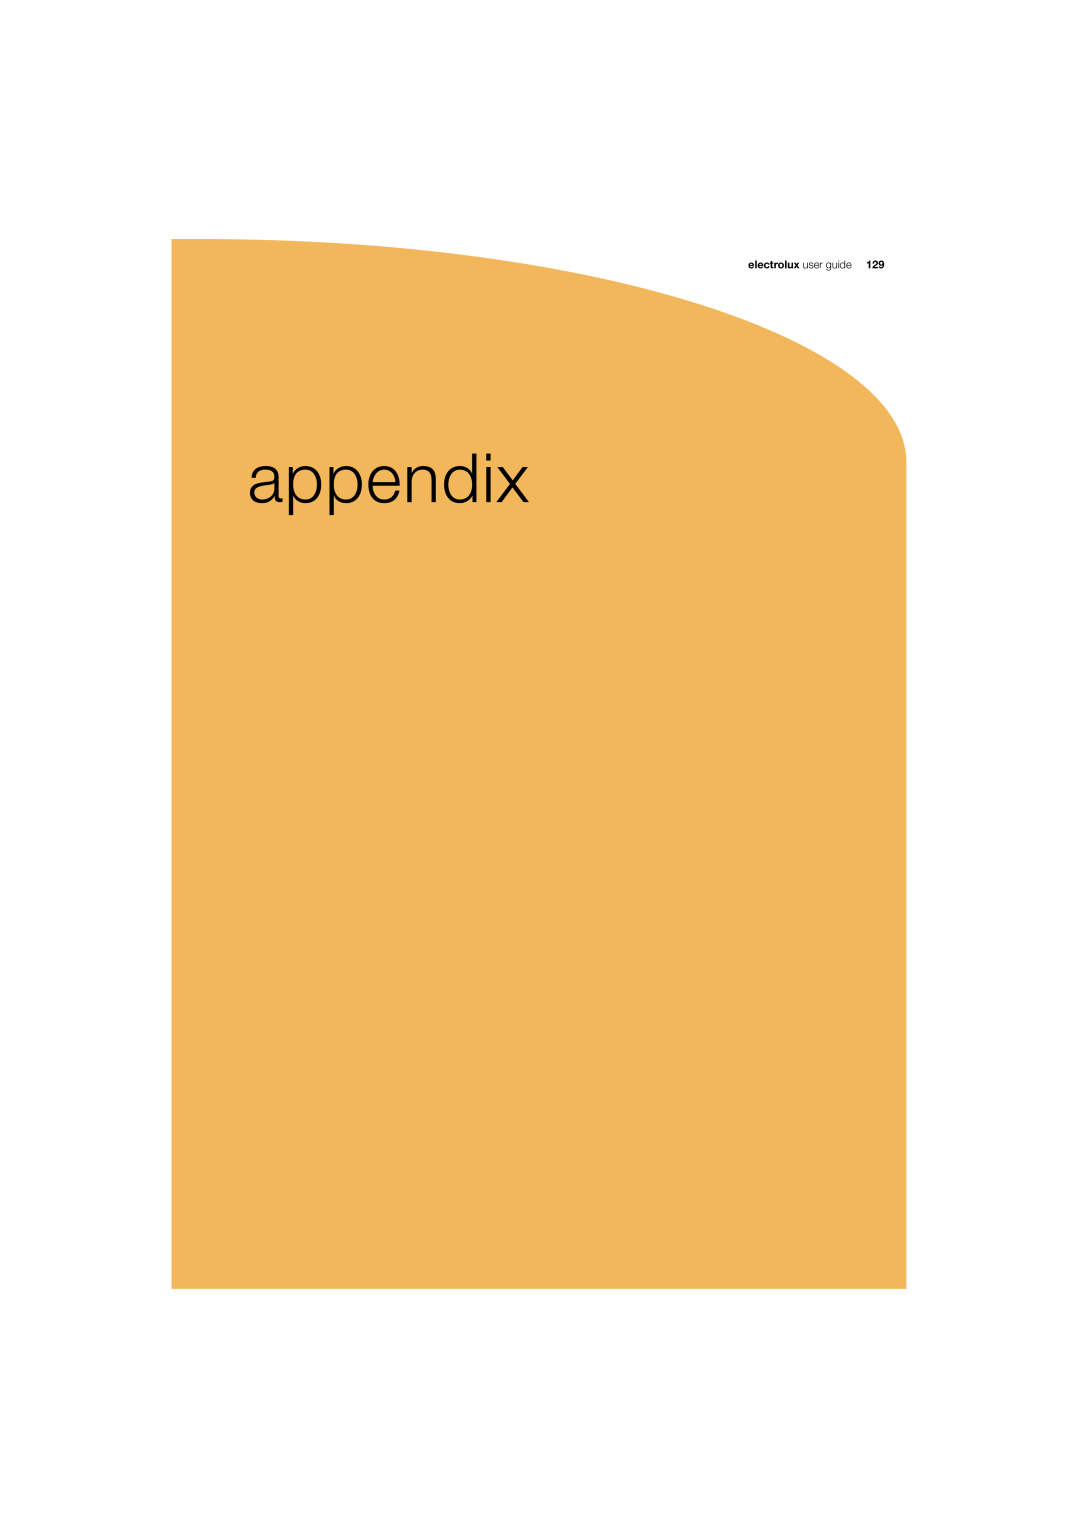 Electrolux 180 manual appendix, electrolux user guide 